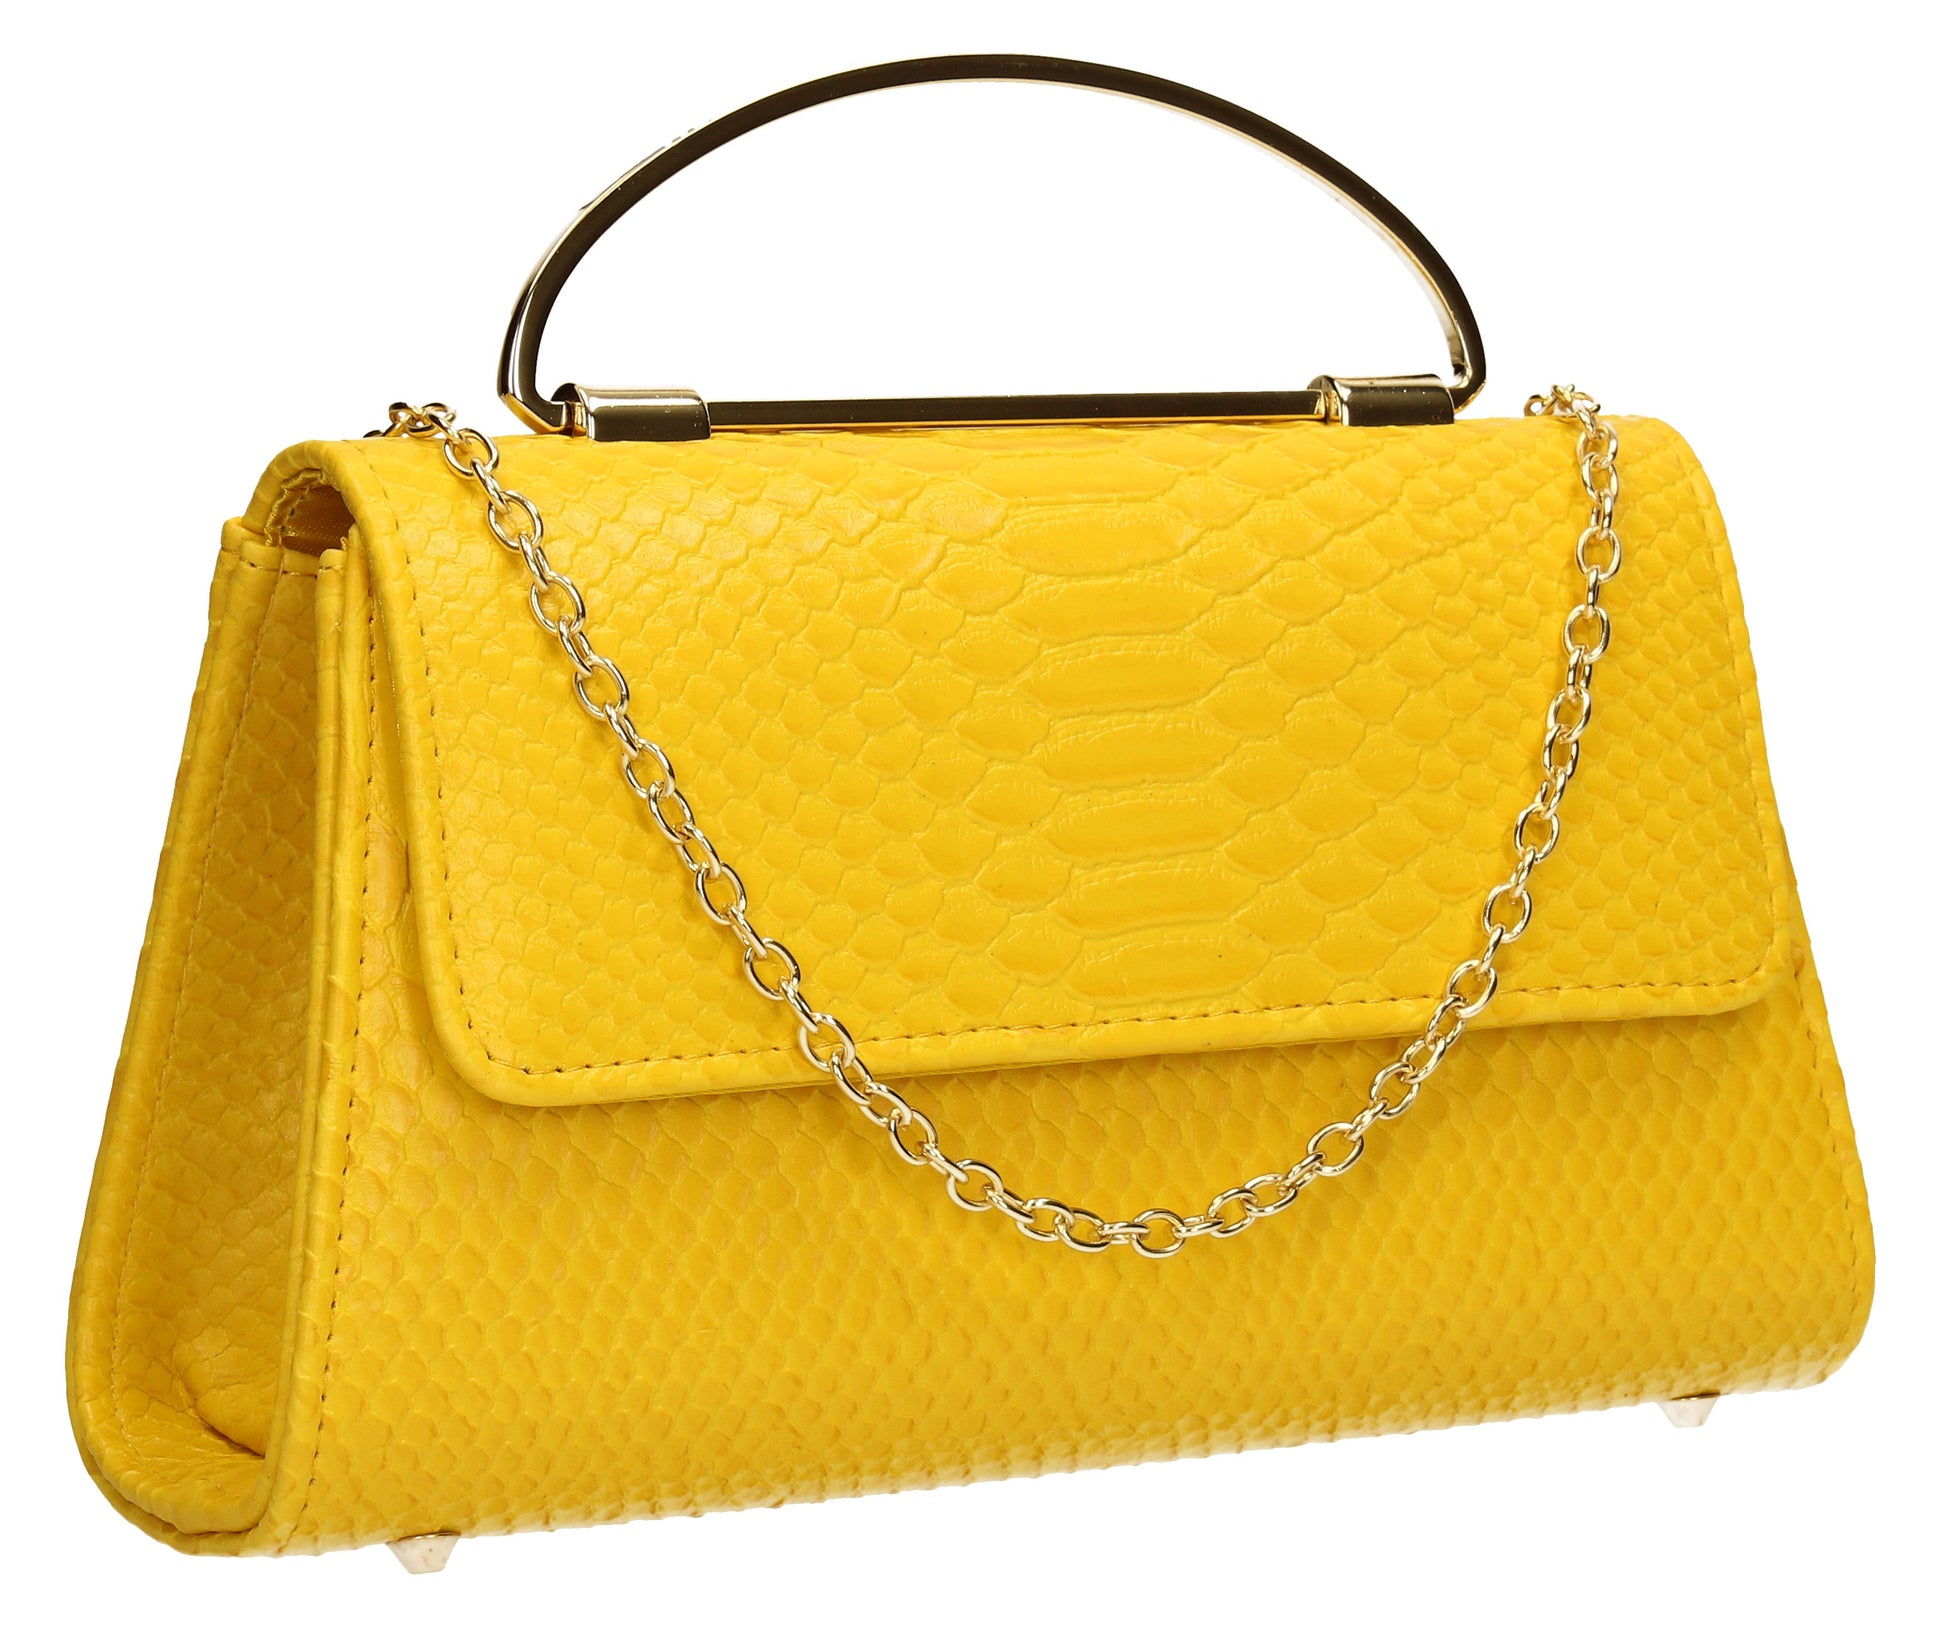 SWANKYSWANS Laura Clutch Bag Yellow Cute Cheap Clutch Bag For Weddings School and Work